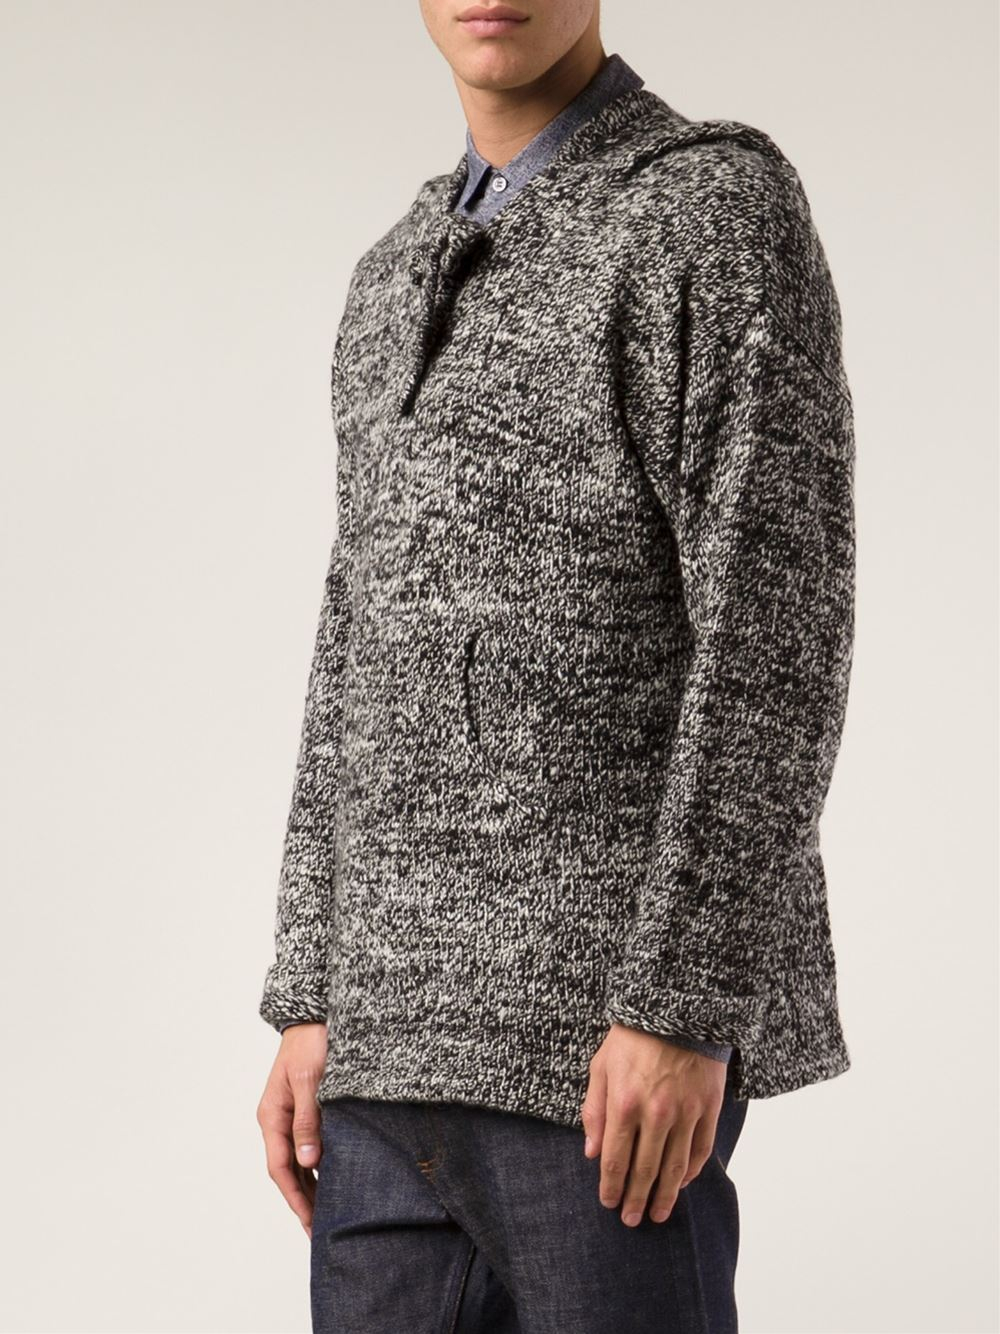 Lyst - The Elder Statesman Baja Pullover Sweater in Black for Men